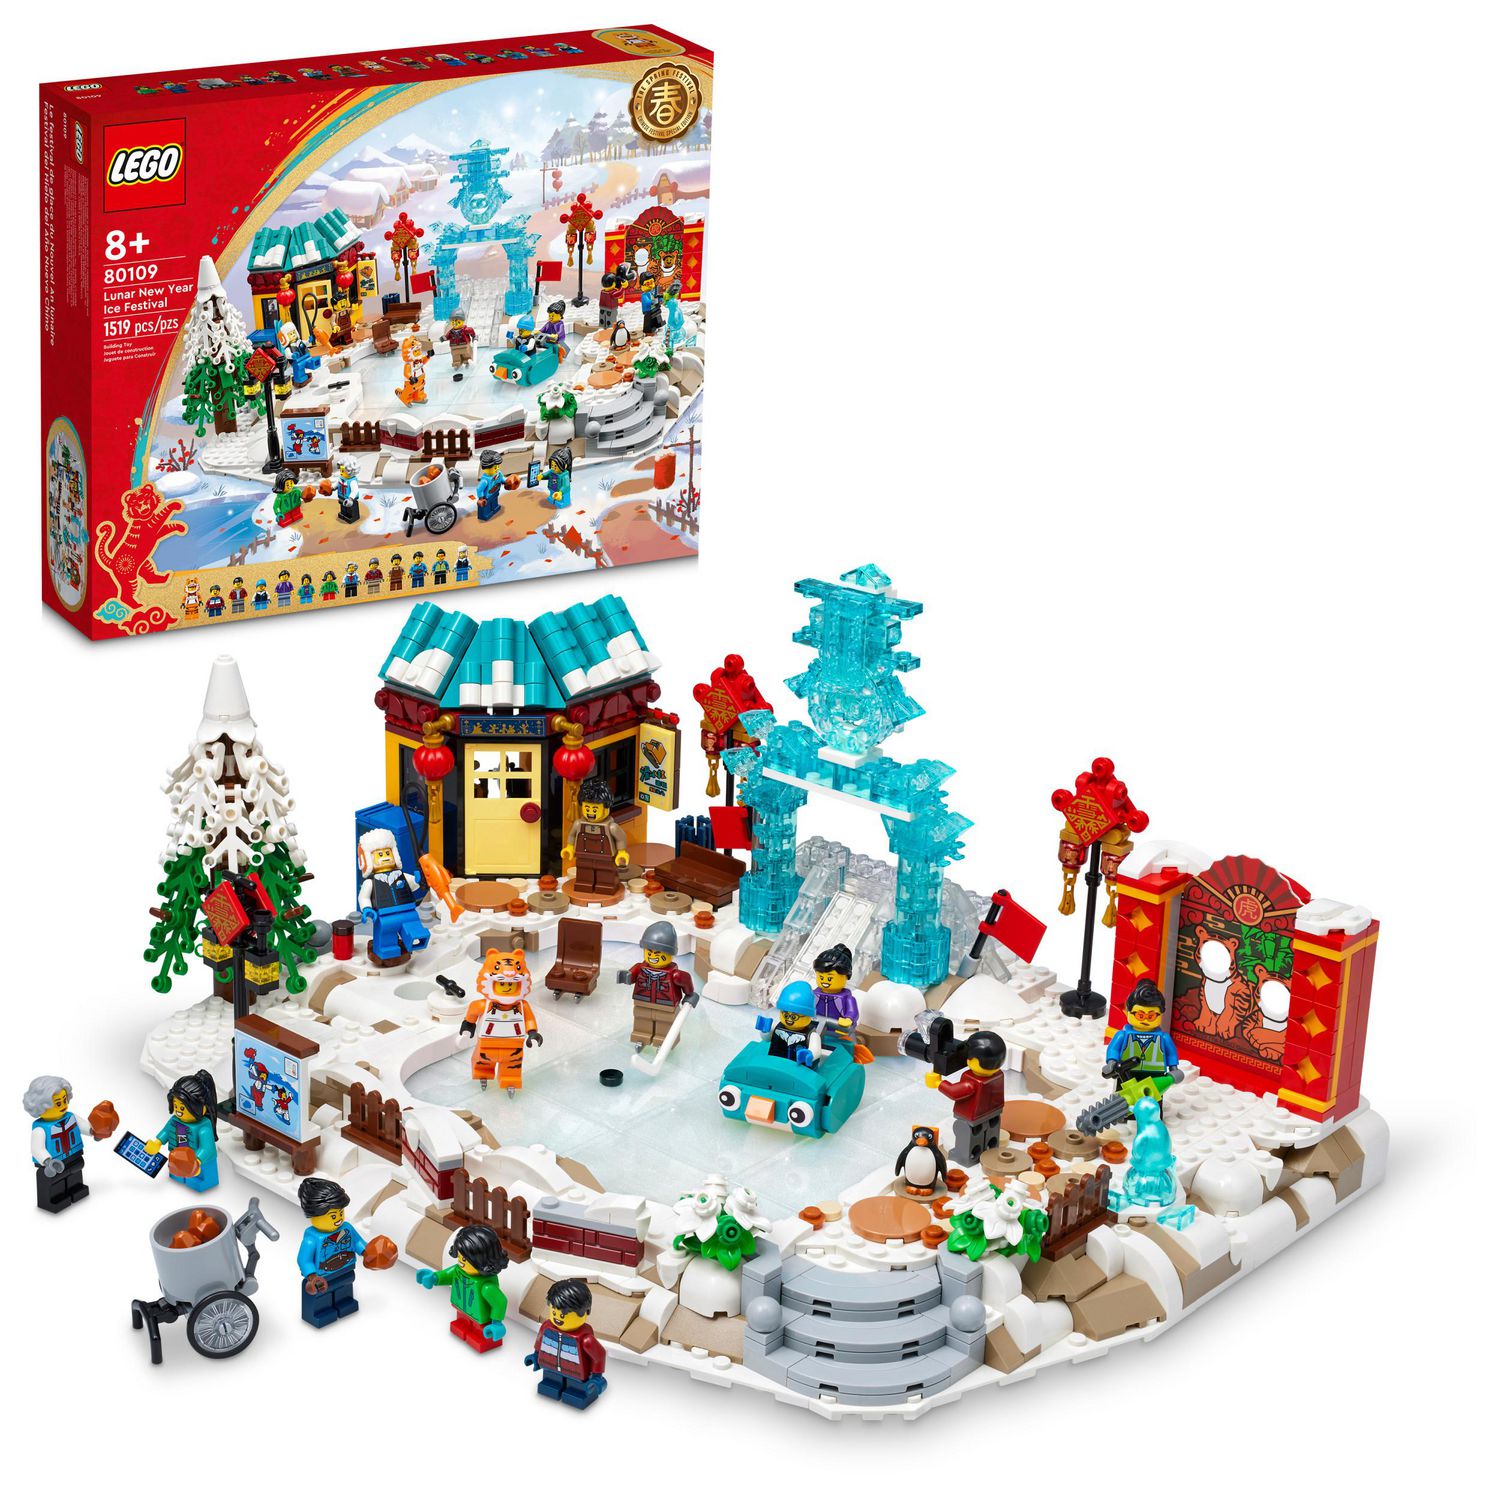 LEGO Lunar New Year Ice 80109 Toy Building Kit (1,519 Pieces) | Walmart